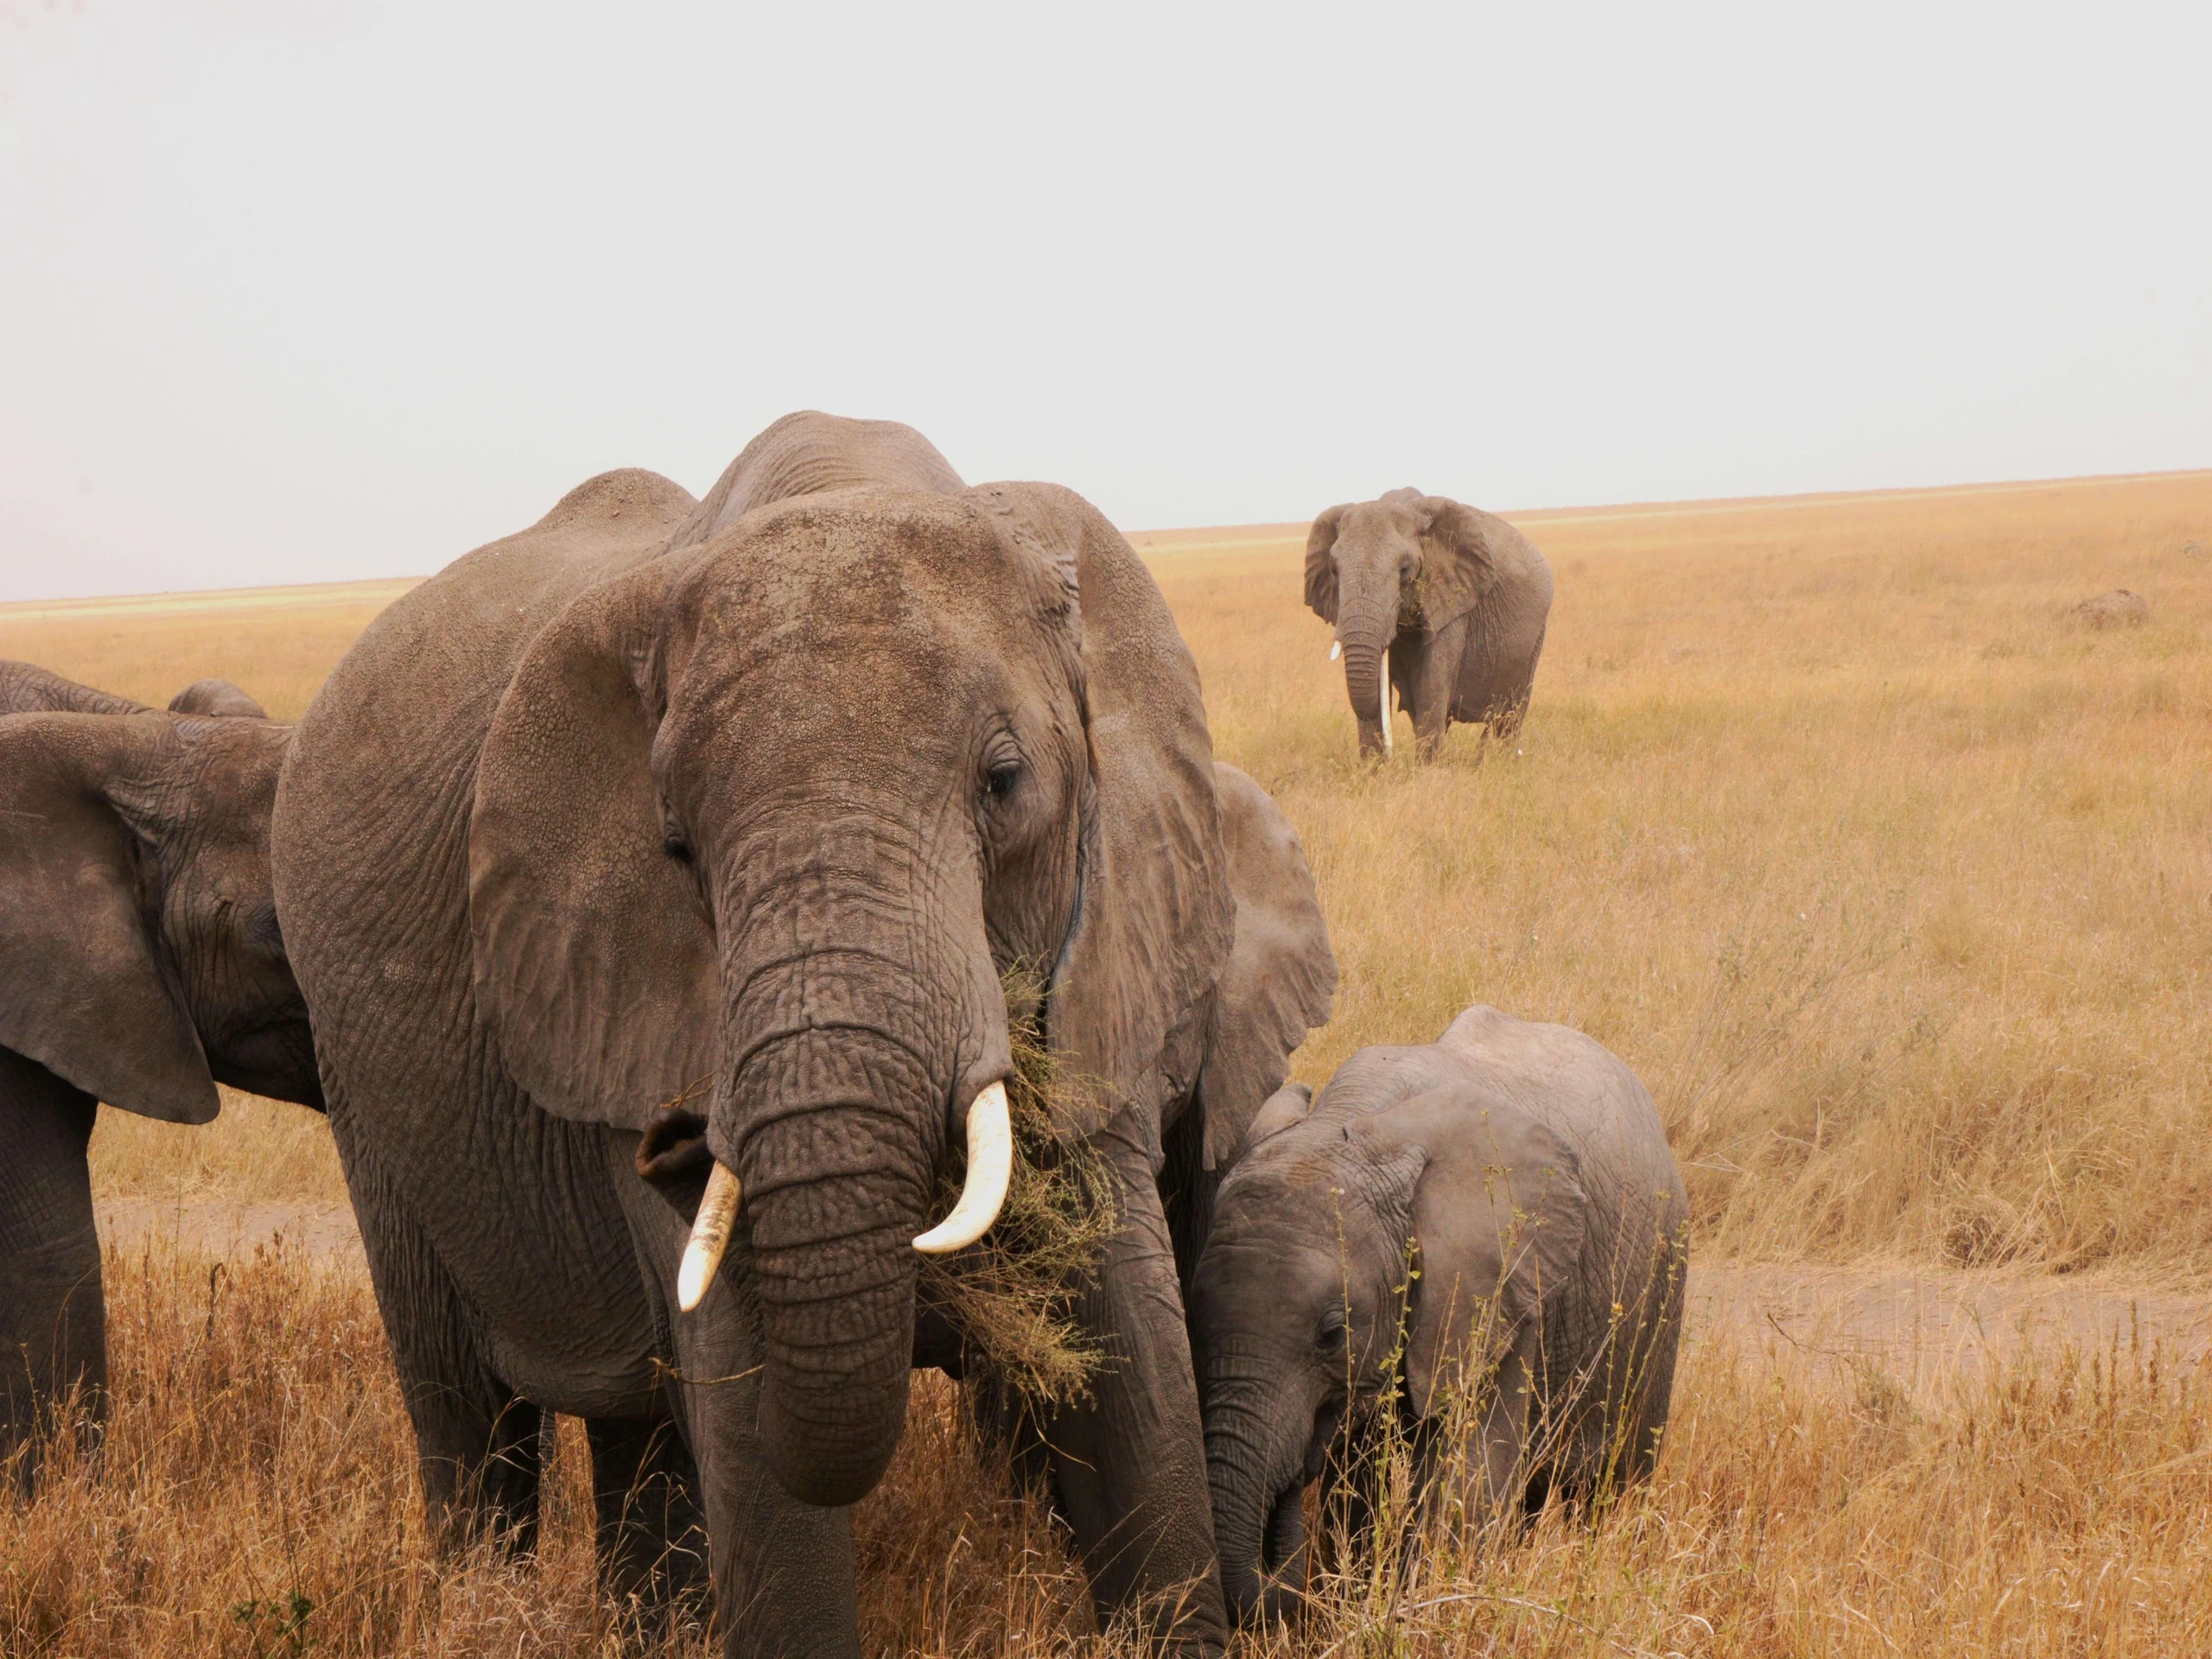 Elephants in Serengeti National Park